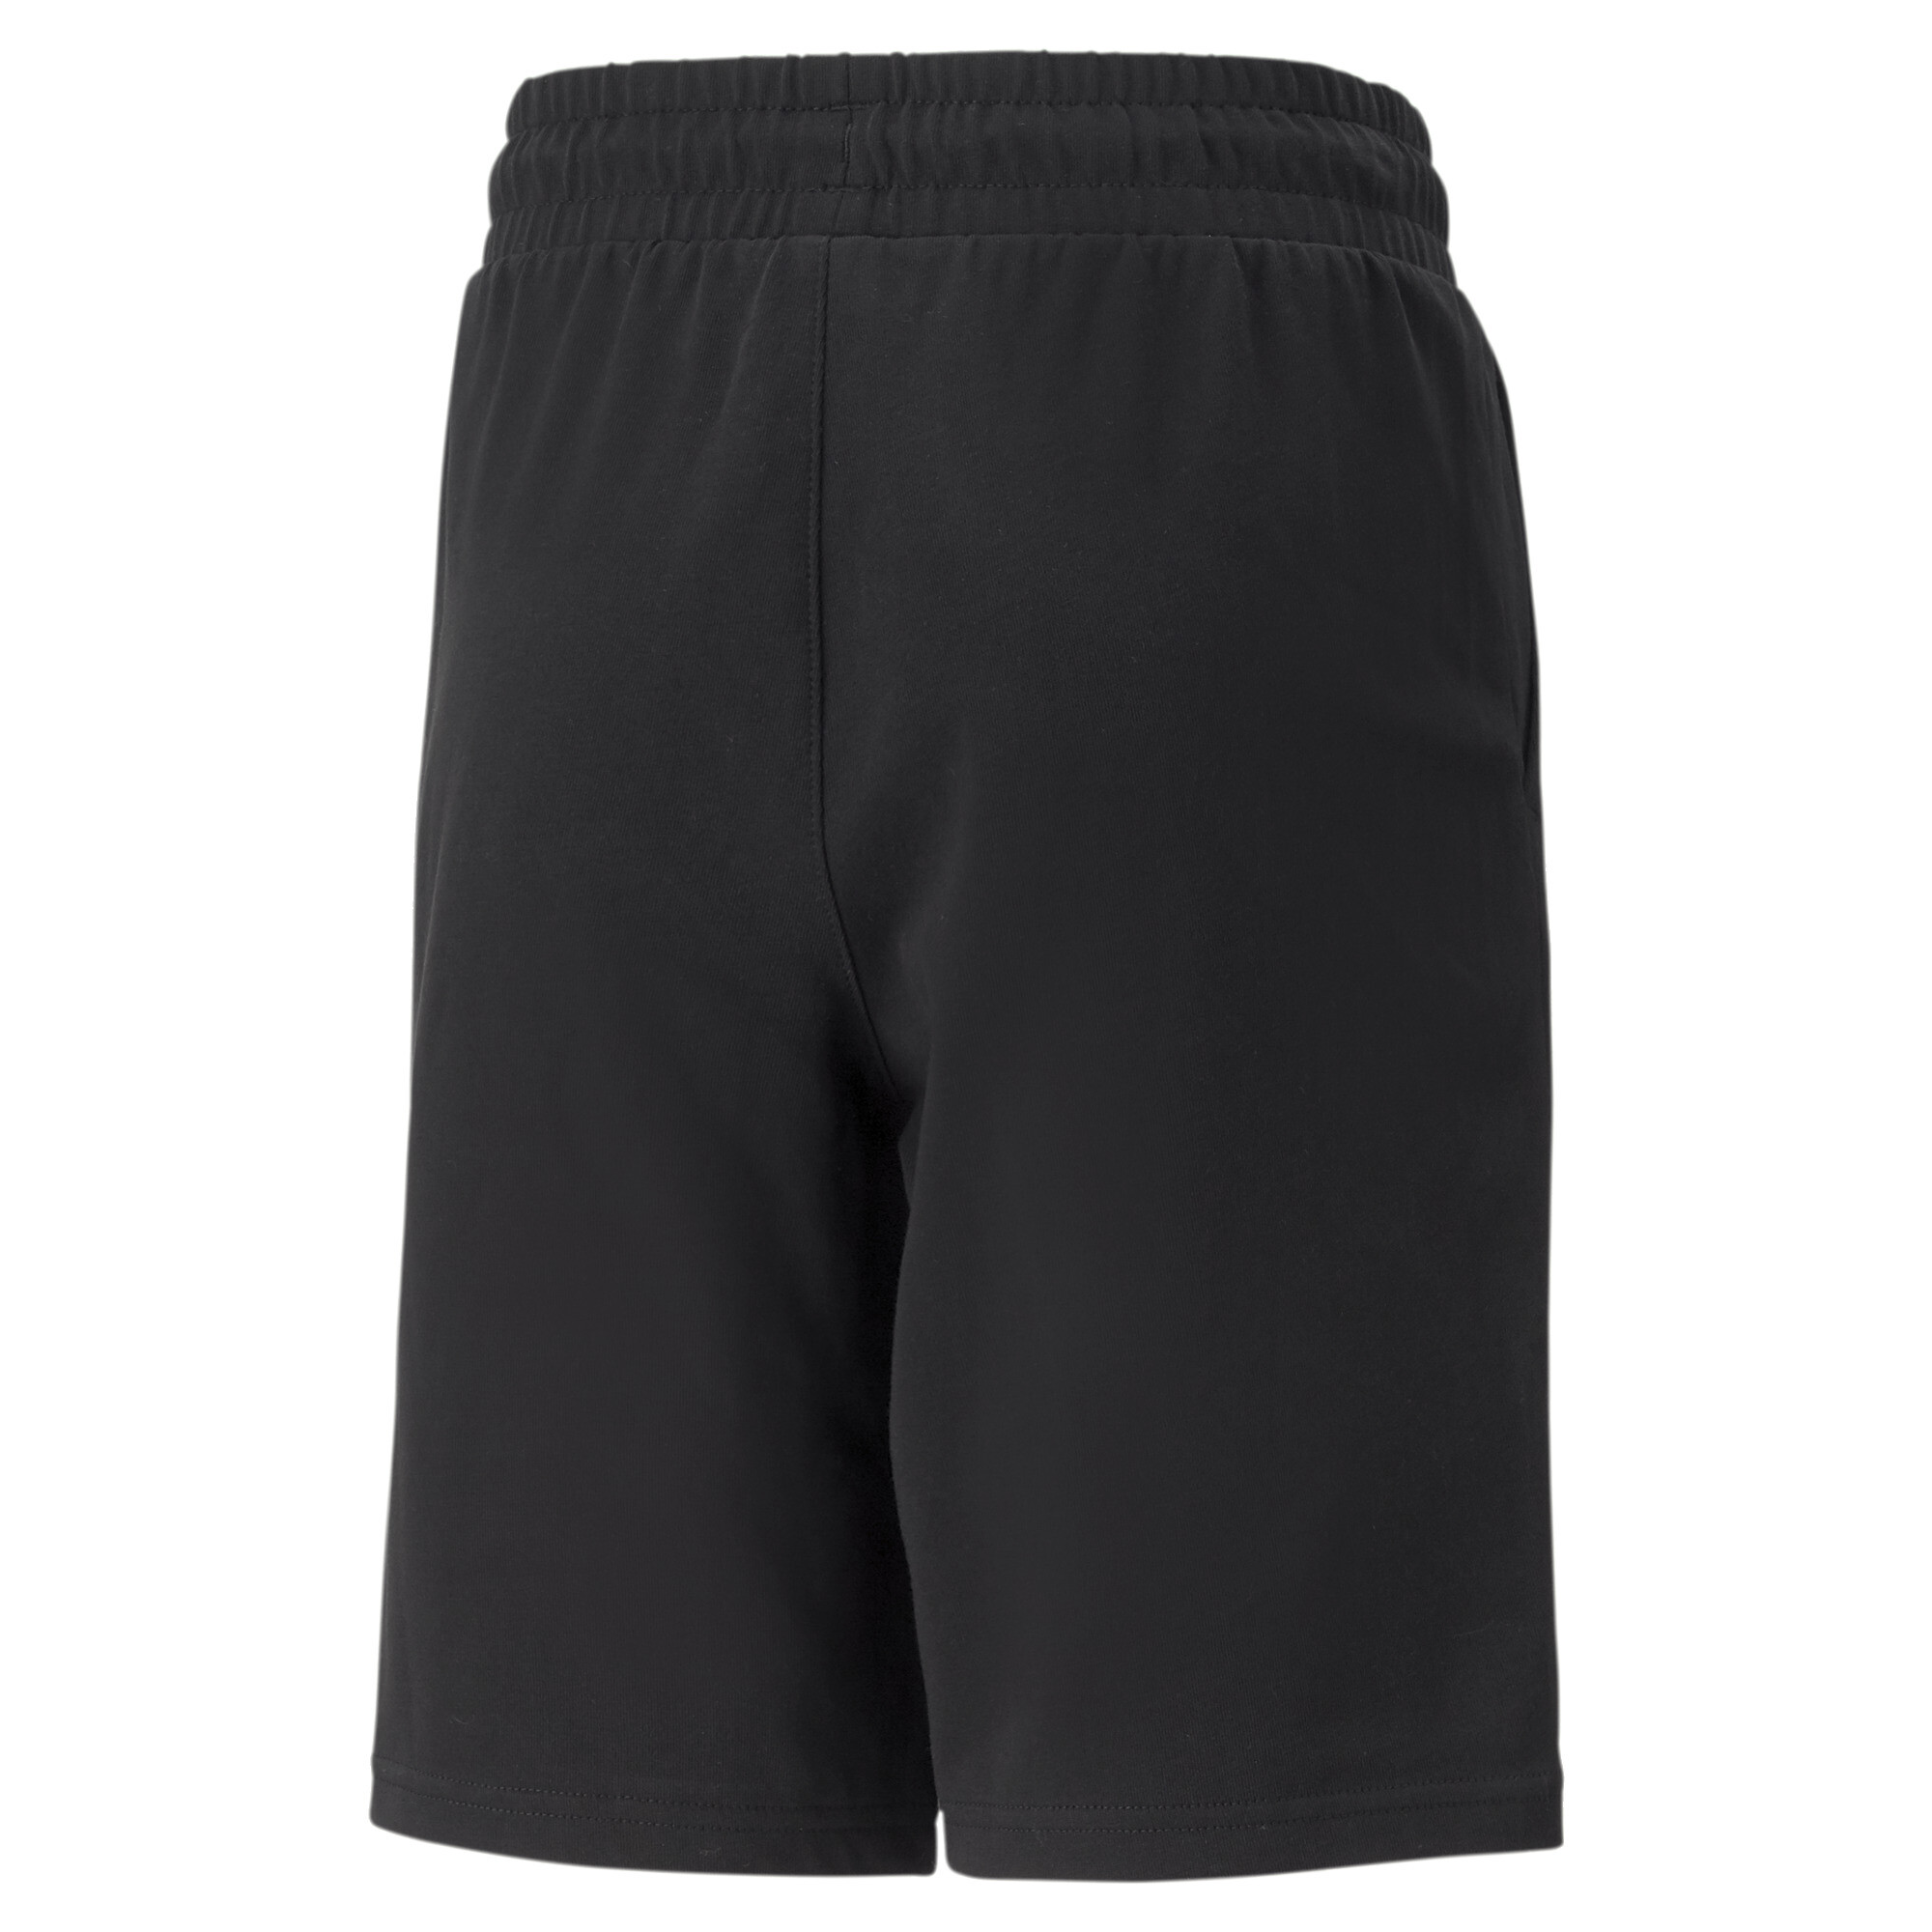 PUMA Alpha Shorts In Black, Size 3-4 Youth